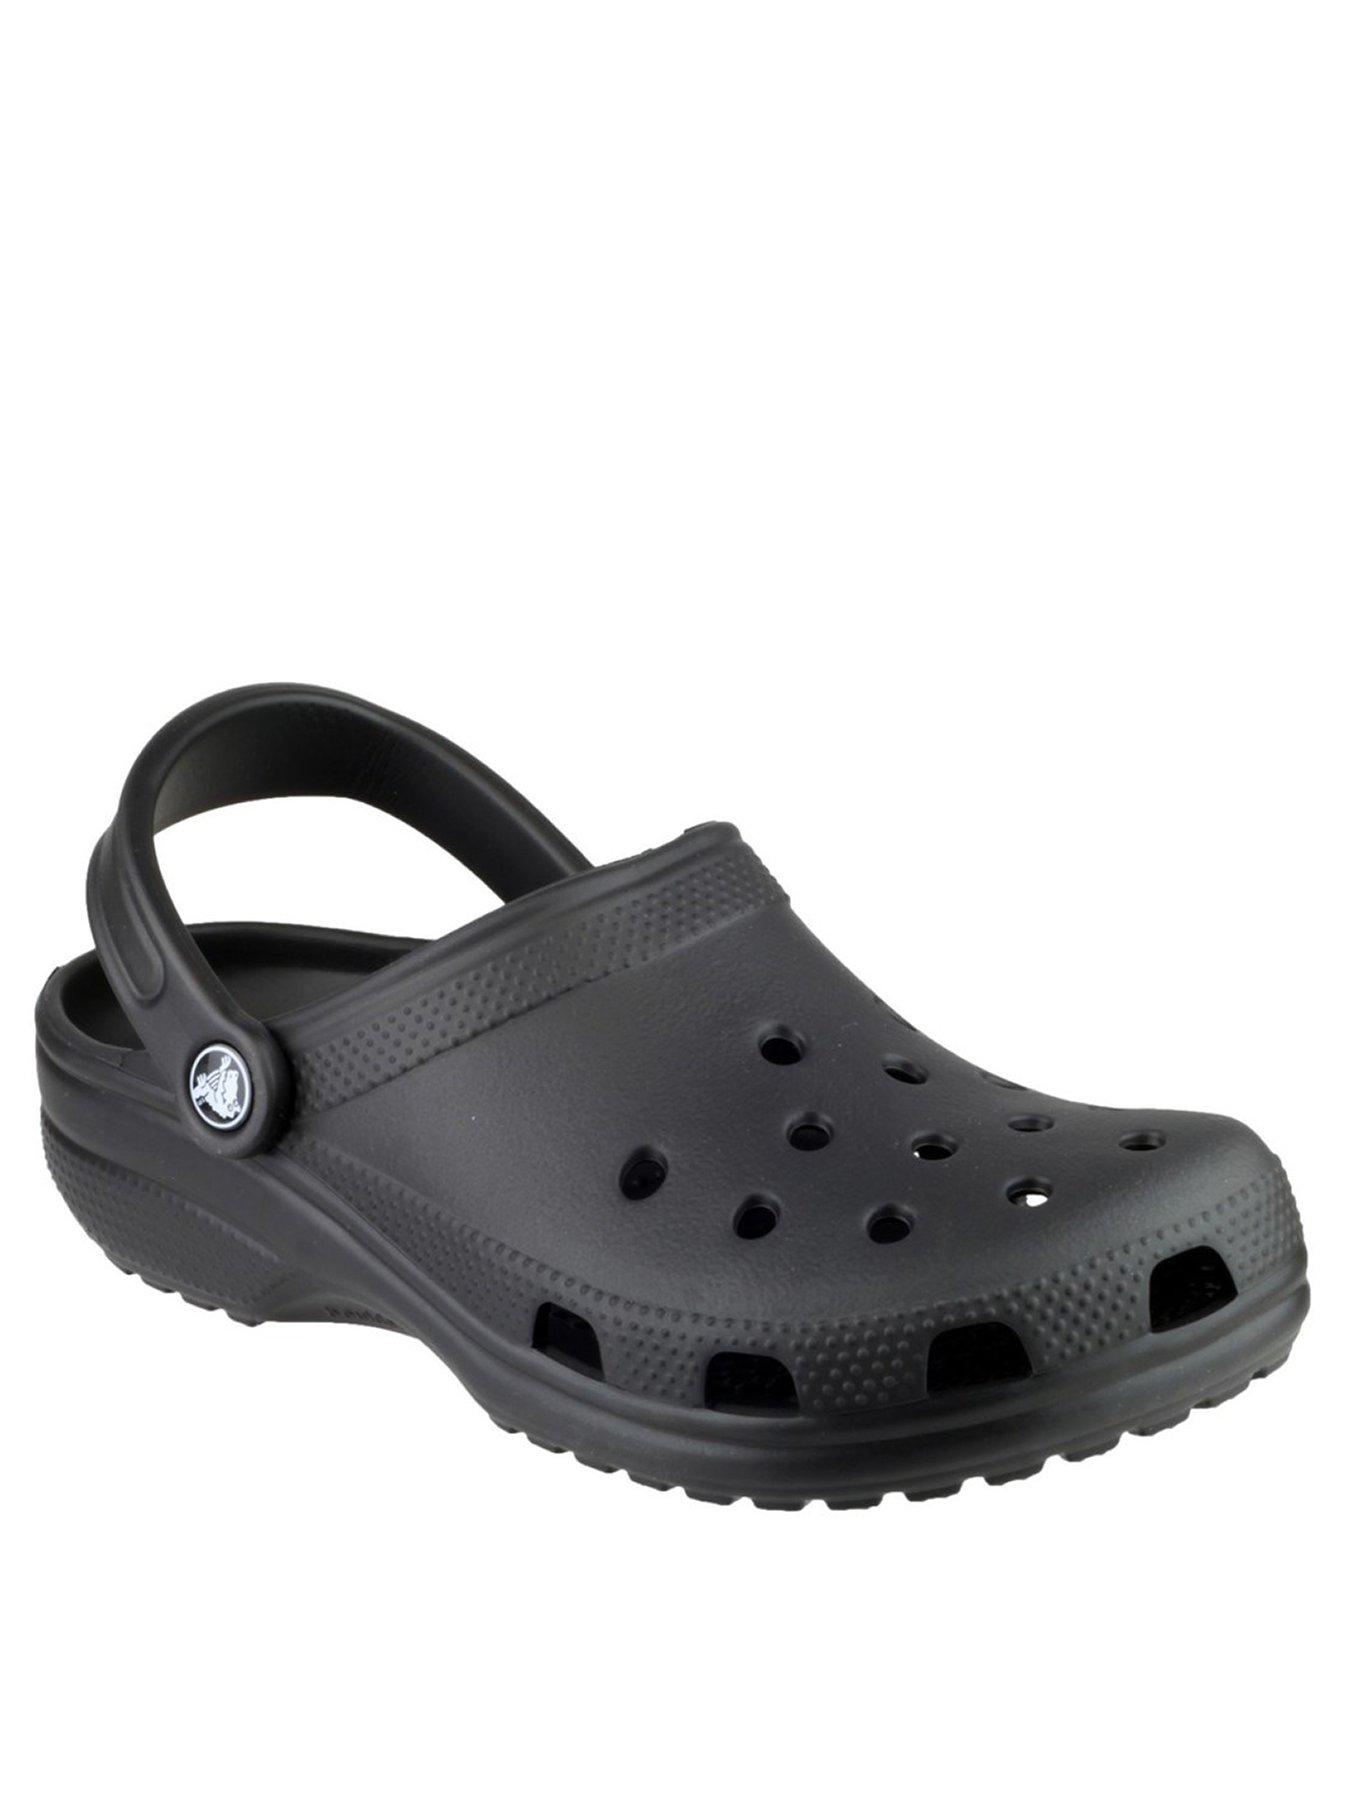 black baby crocs